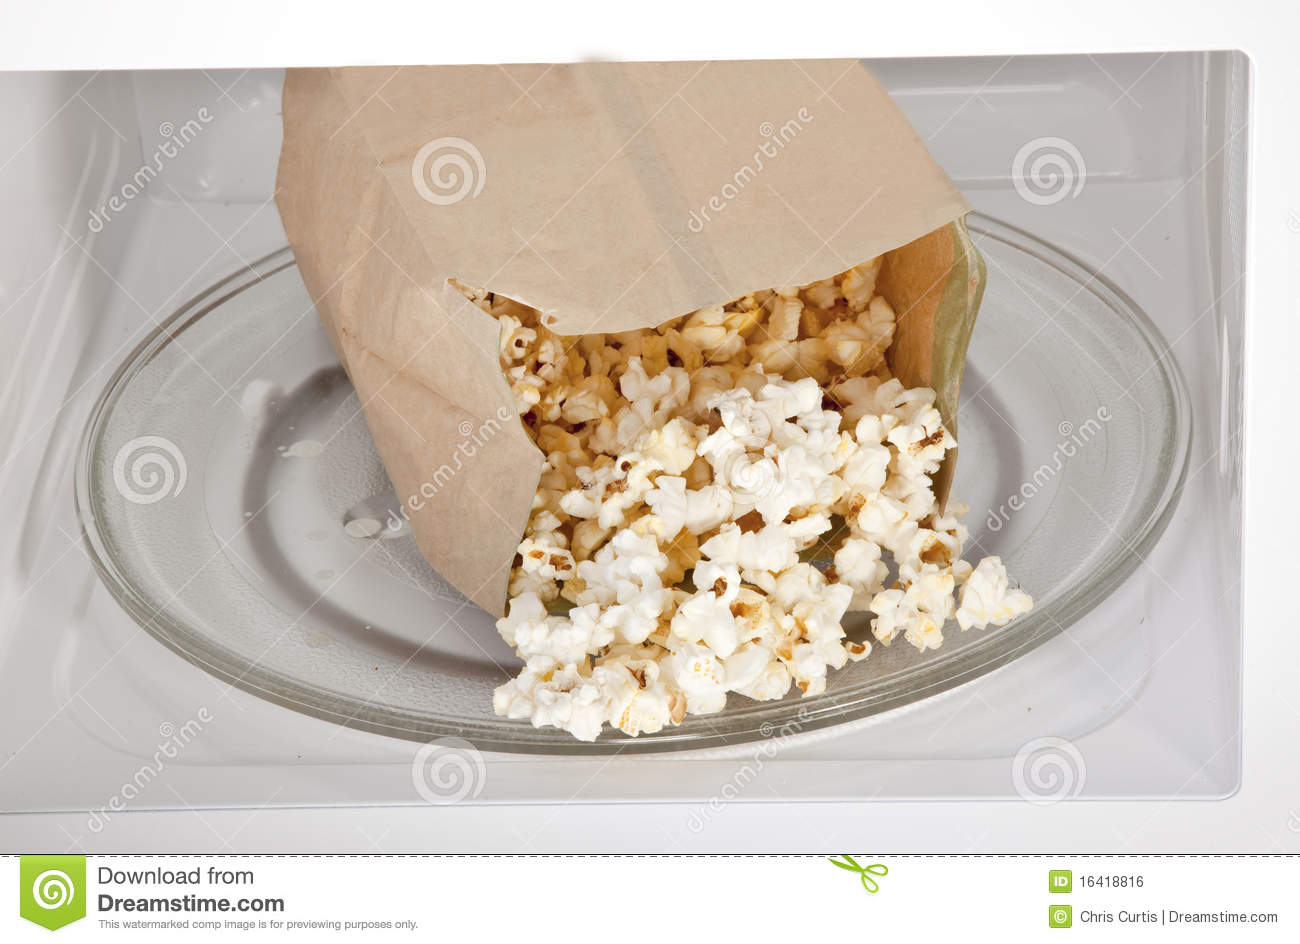 Microwave Popcorn Royalty Free Stock Image   Image  16418816